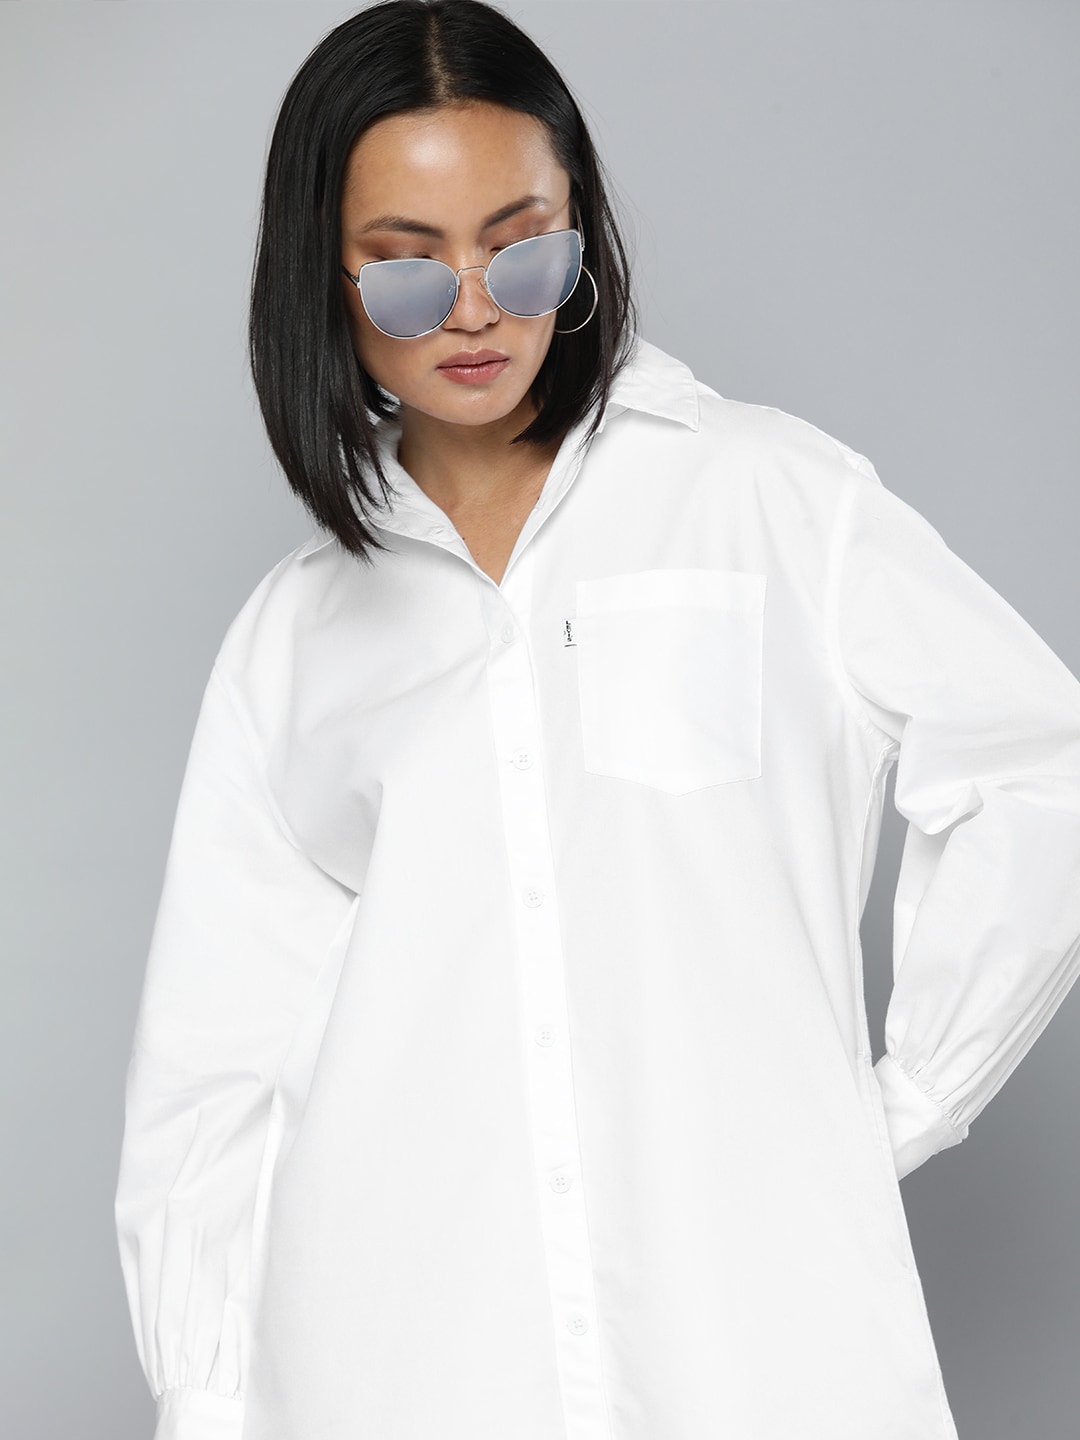 Levis X Deepika Padukone White Hooded Mini Shirt Dress Price in India